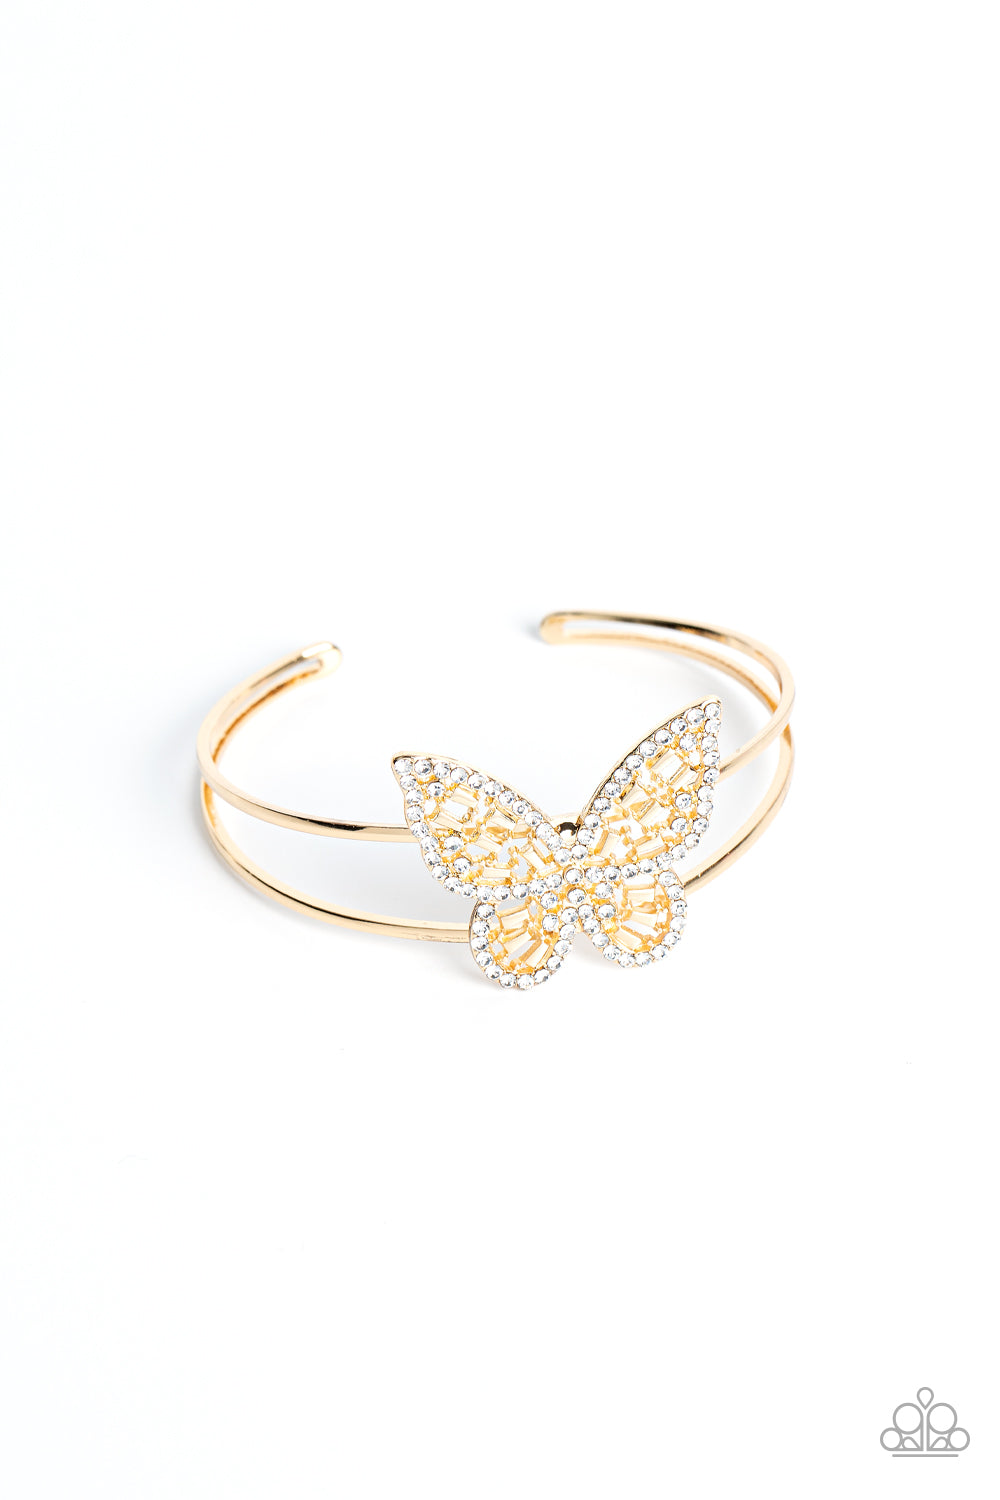 Butterfly Bella - gold - Paparazzi bracelet